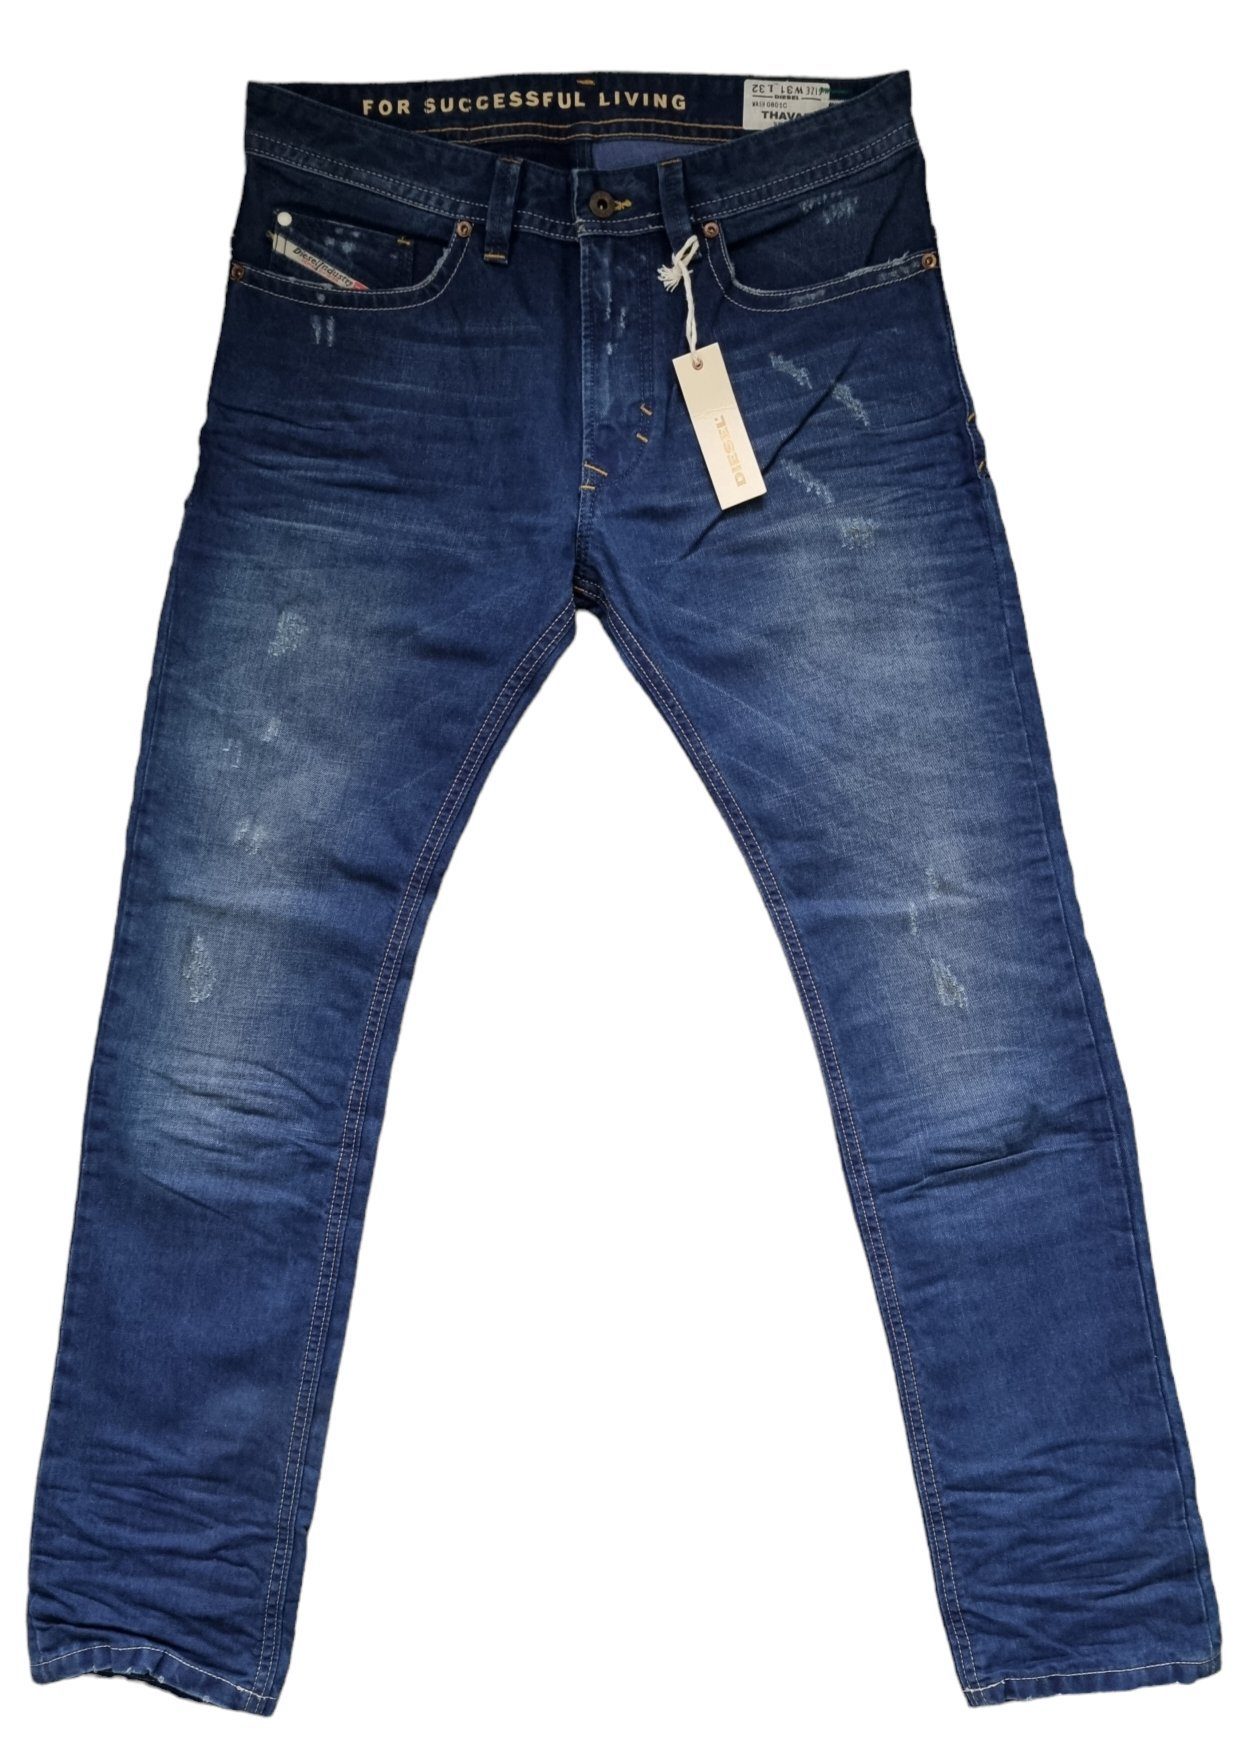 Diesel Slim-fit-Jeans Thavar 0801C (Blau Dunkelblau, Dirty Vintage Look) 100% Baumwolle, Leder Applikation, 5-Pocket-Style